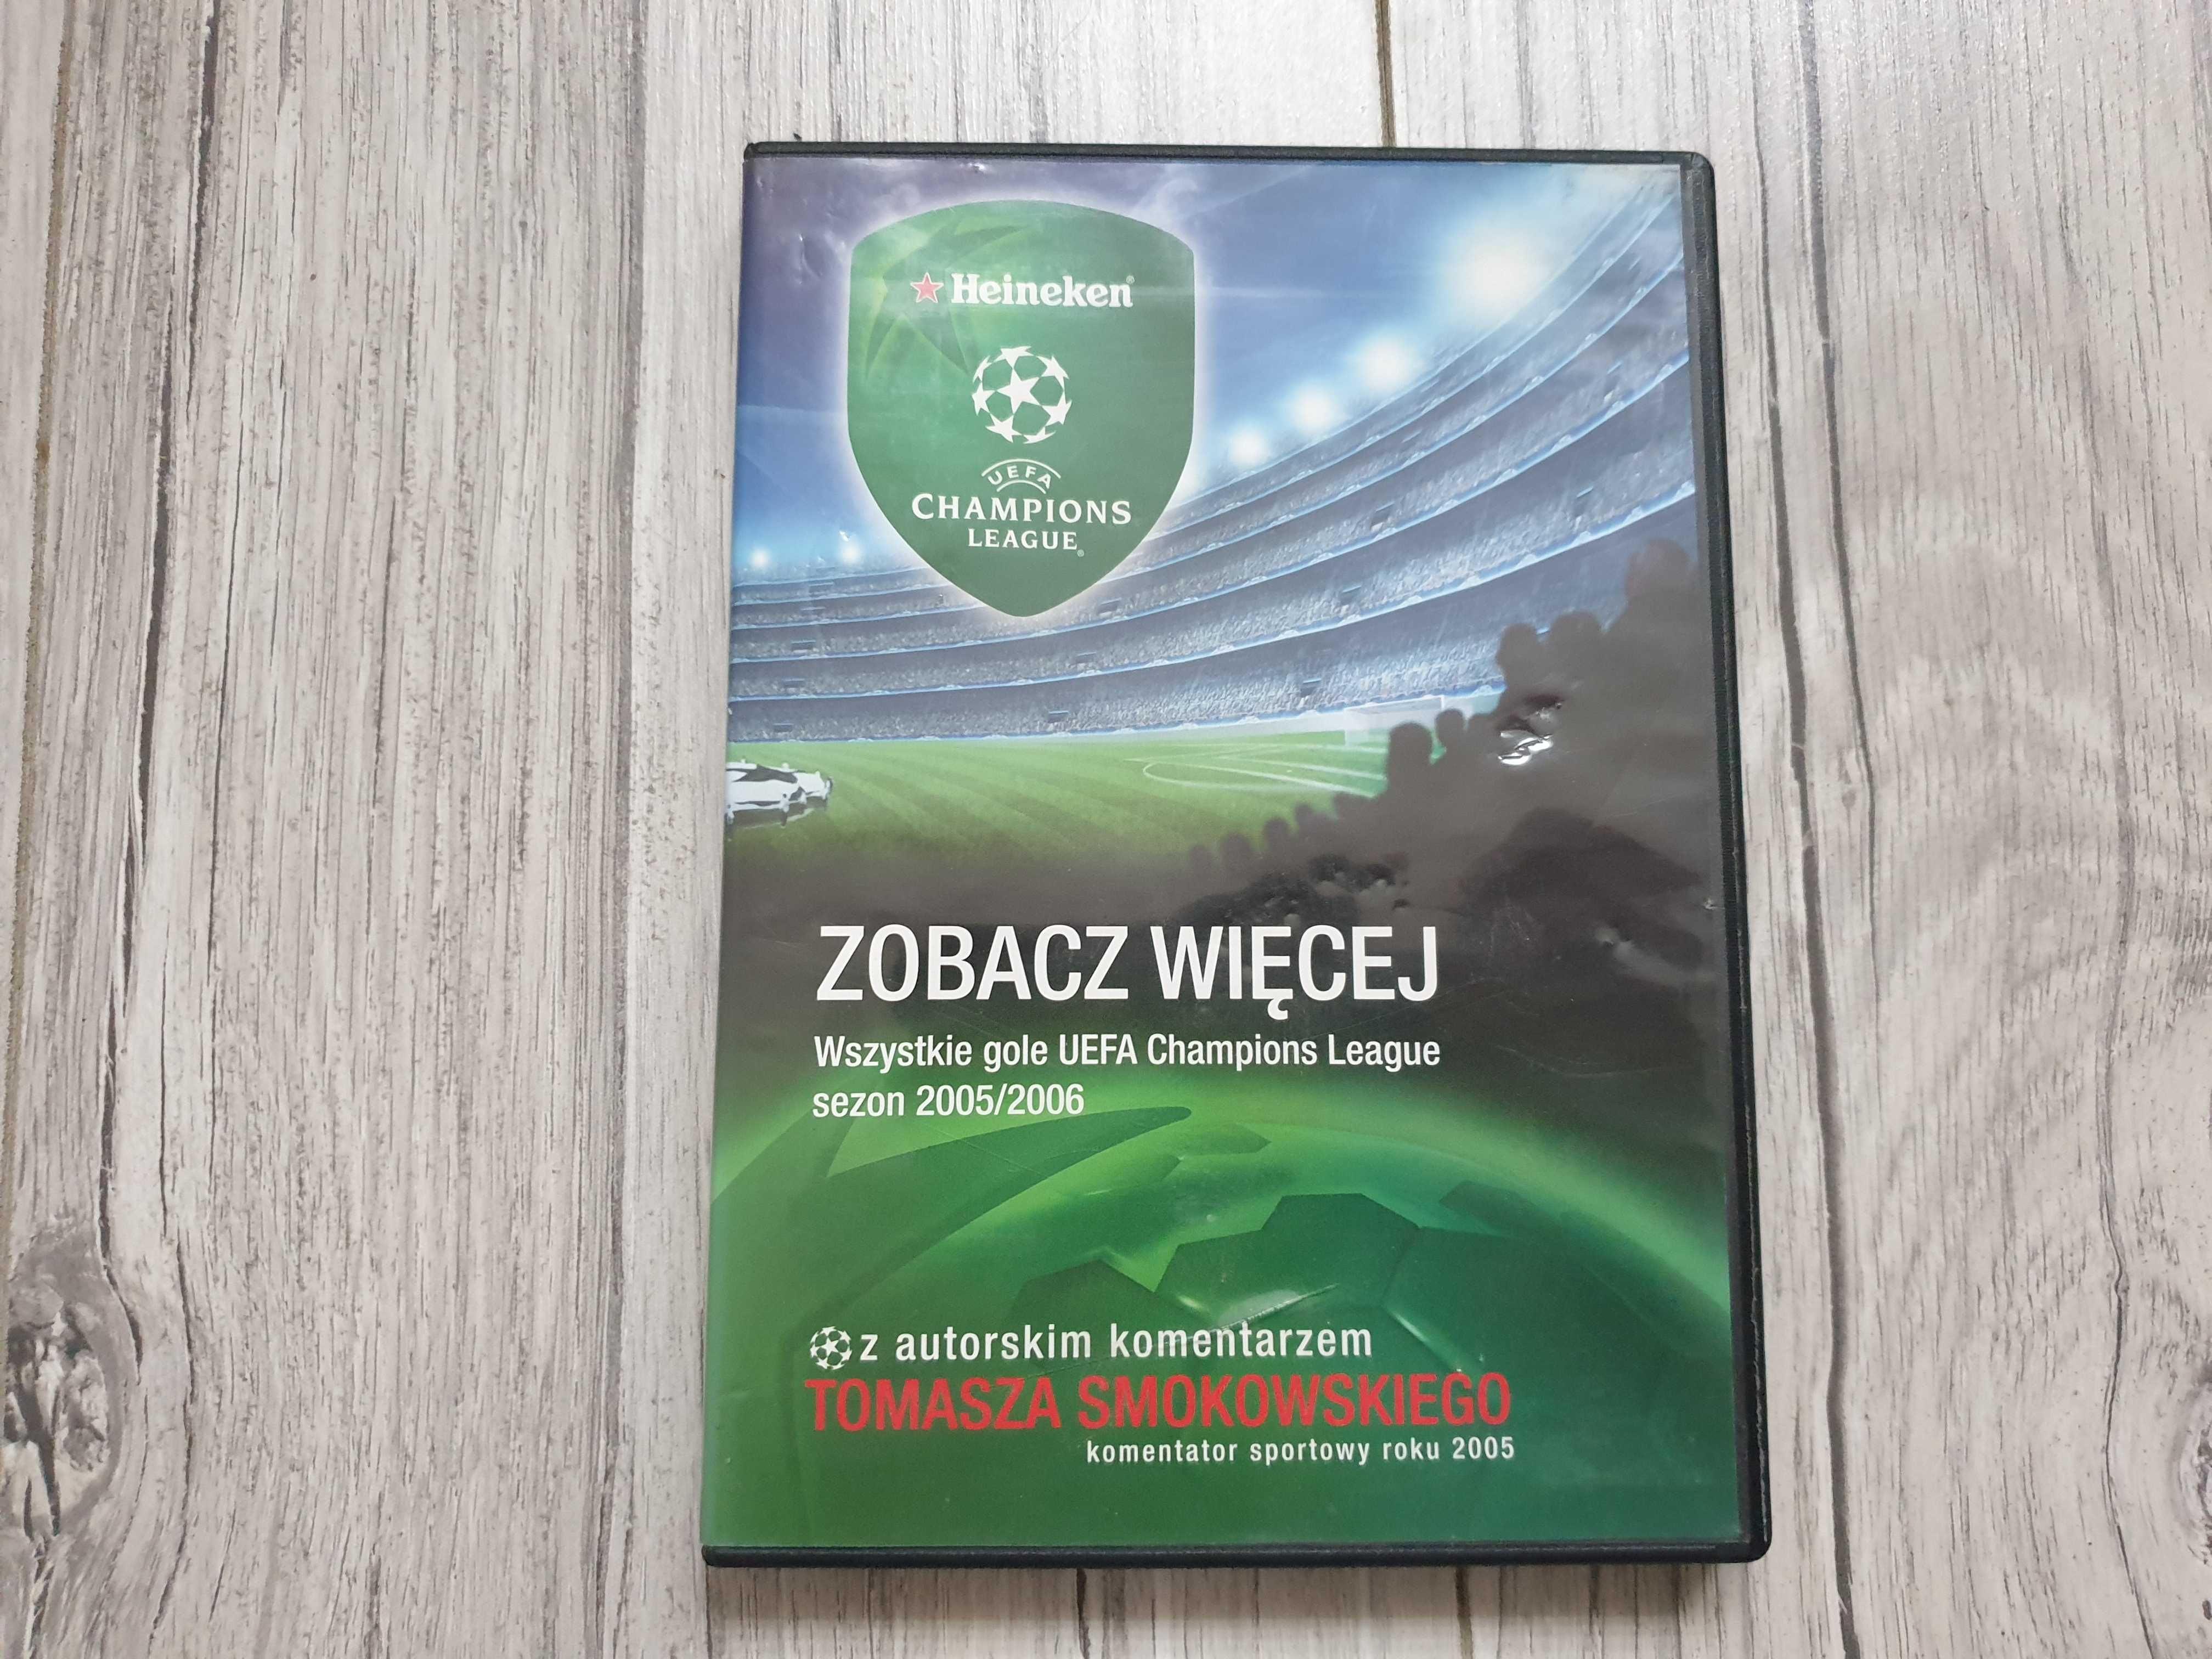 Historia Futbolu - Piękna Gra -7 płyt DVD + UEFA Champions League